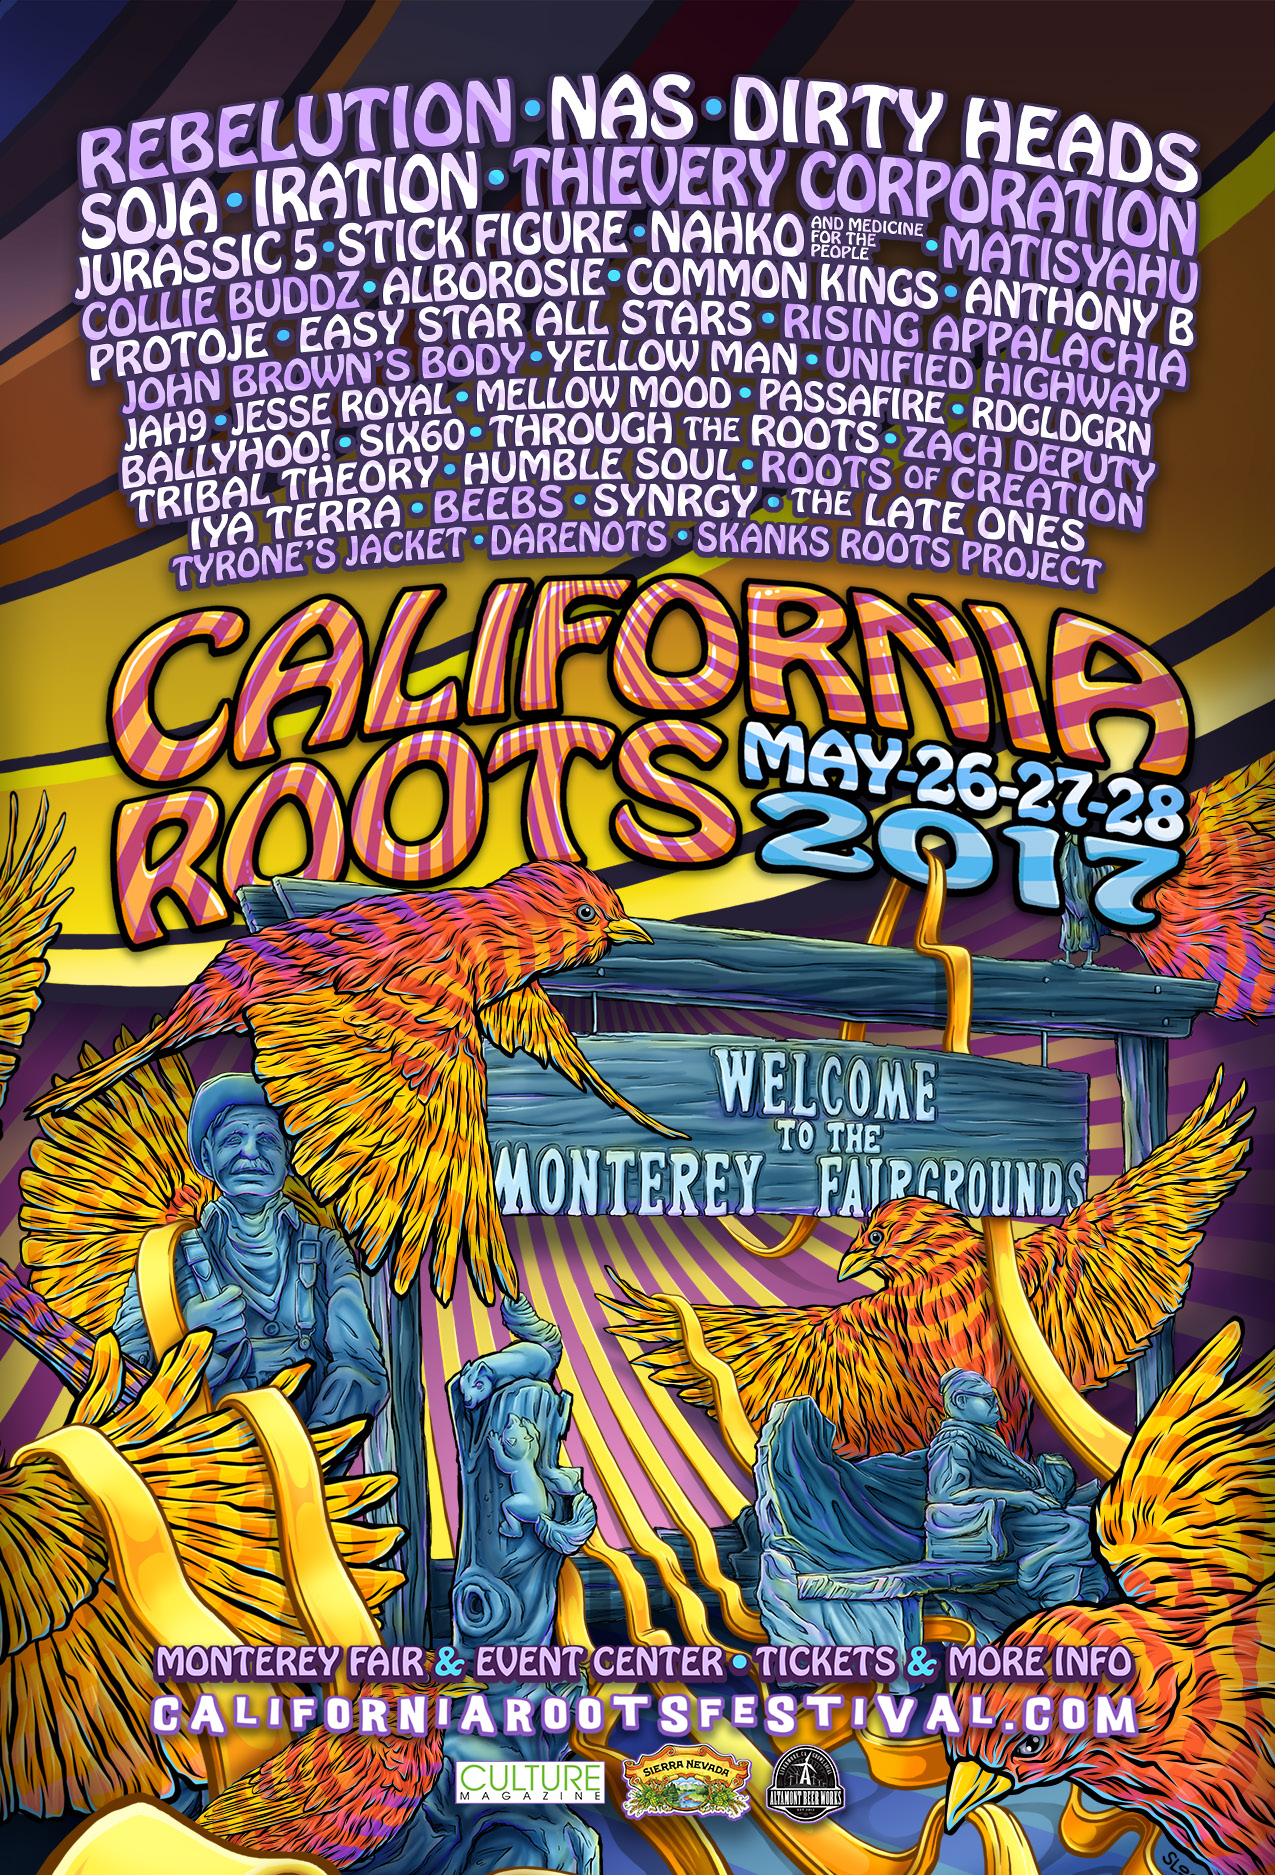 California Roots Music & Arts Festival lineup poster. Photo by: California Roots Music & Arts Festival